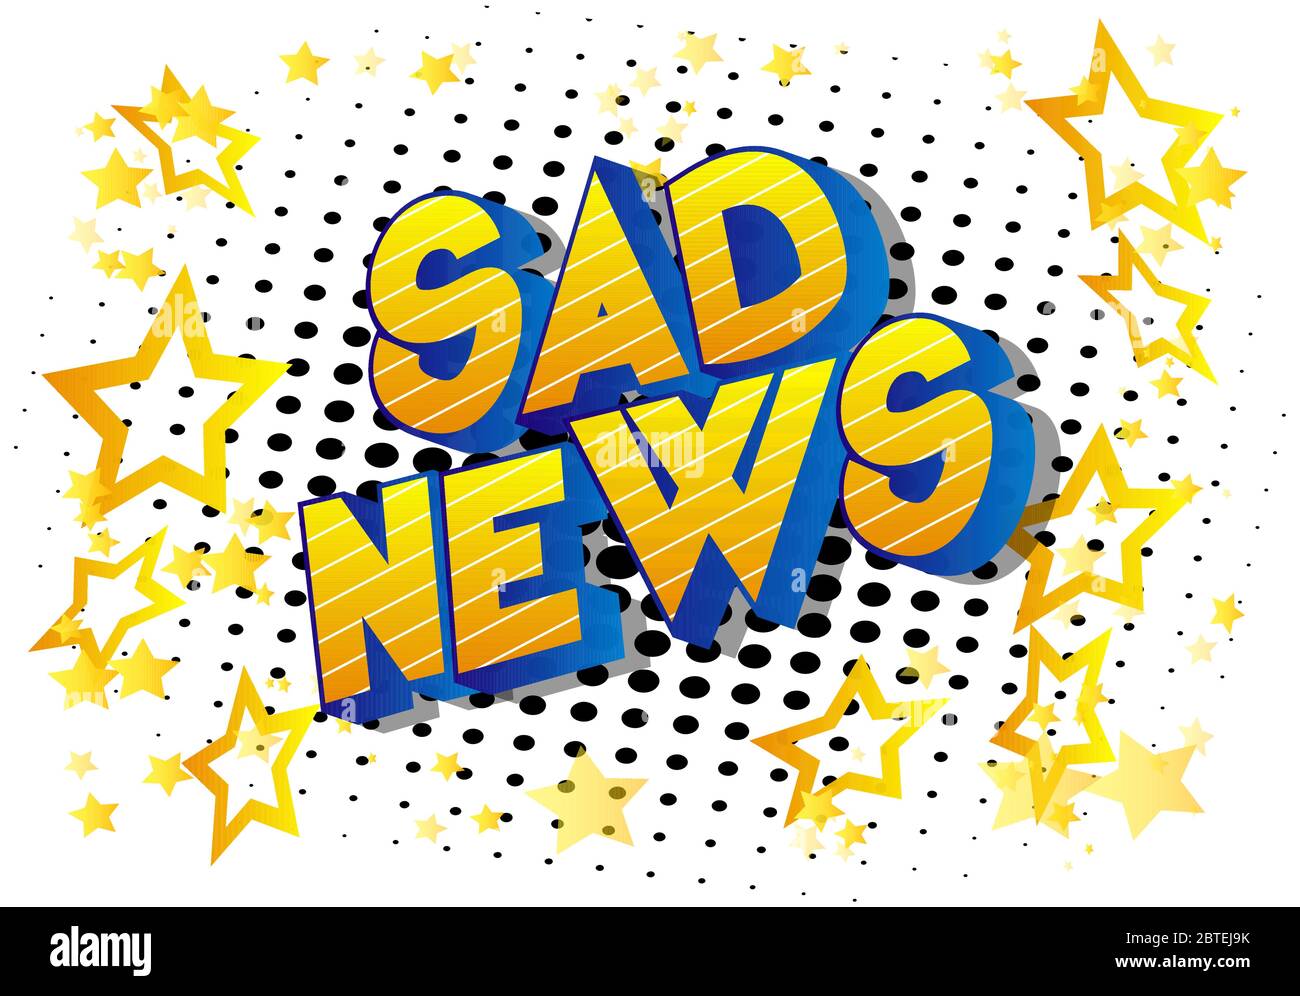 Sad News - Comic-Stil Wort auf abstraktem Hintergrund. Stock Vektor